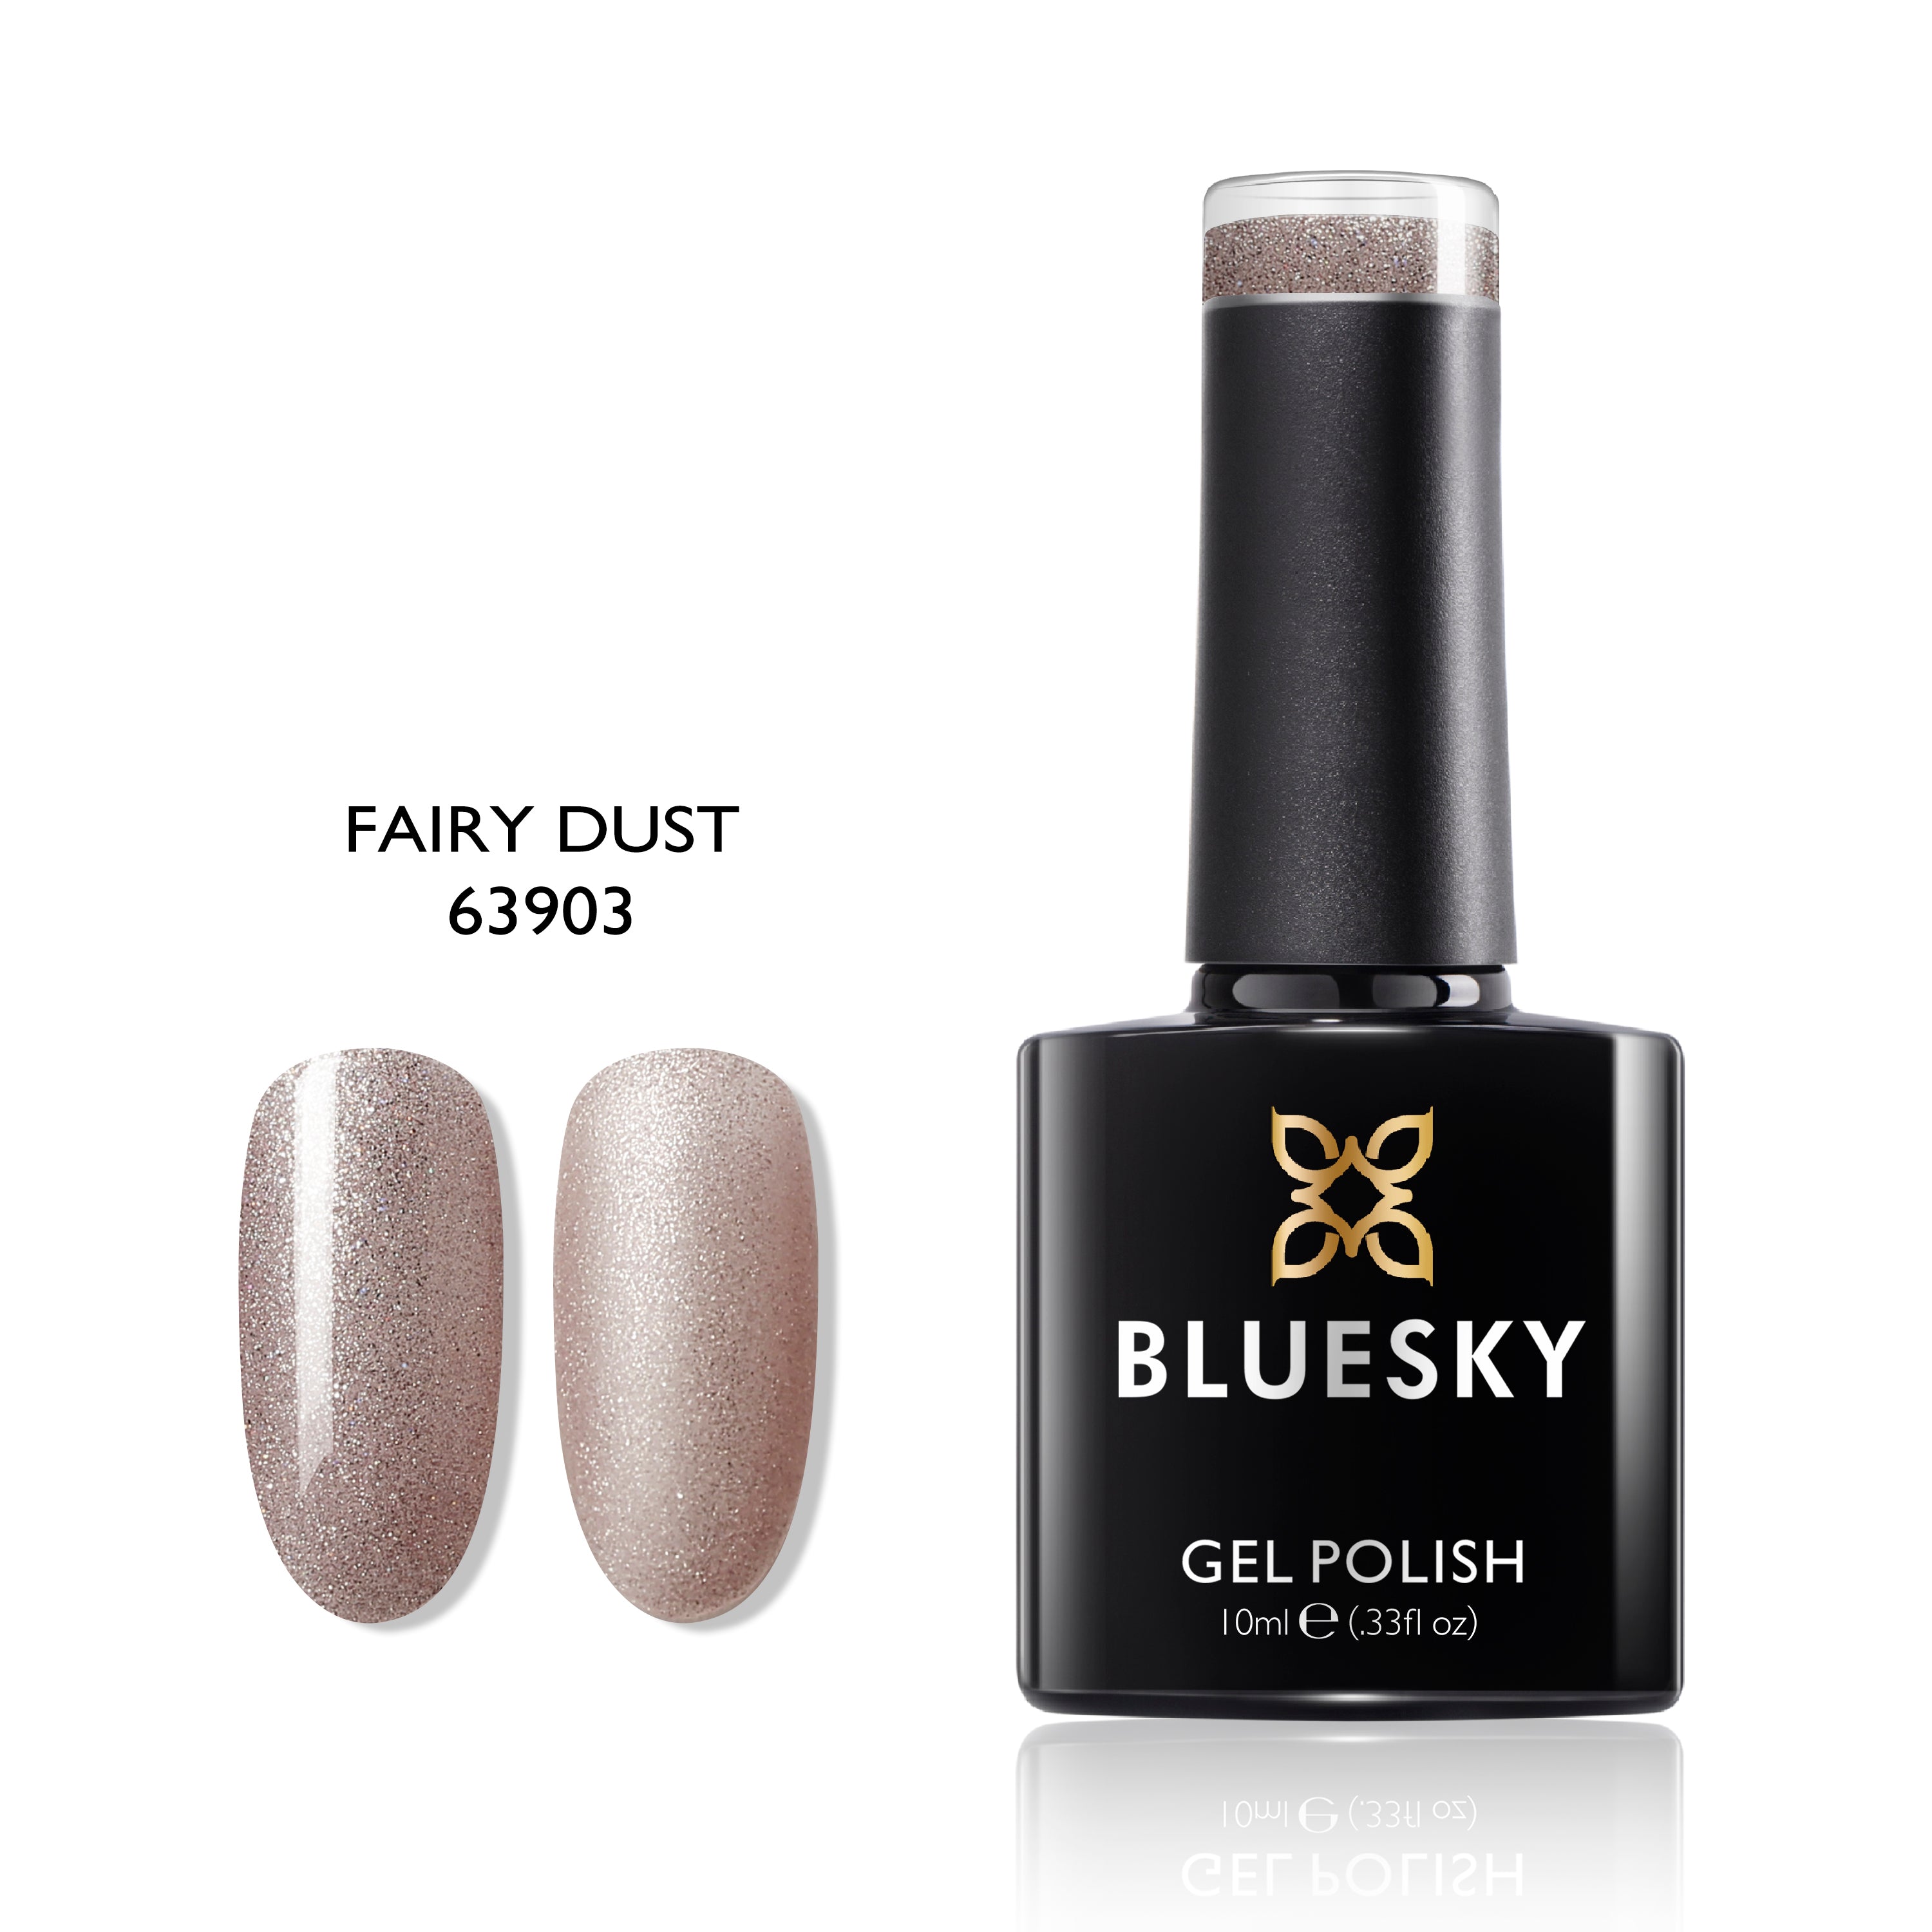 Fairy dust nails Swarovskistones | Instagram